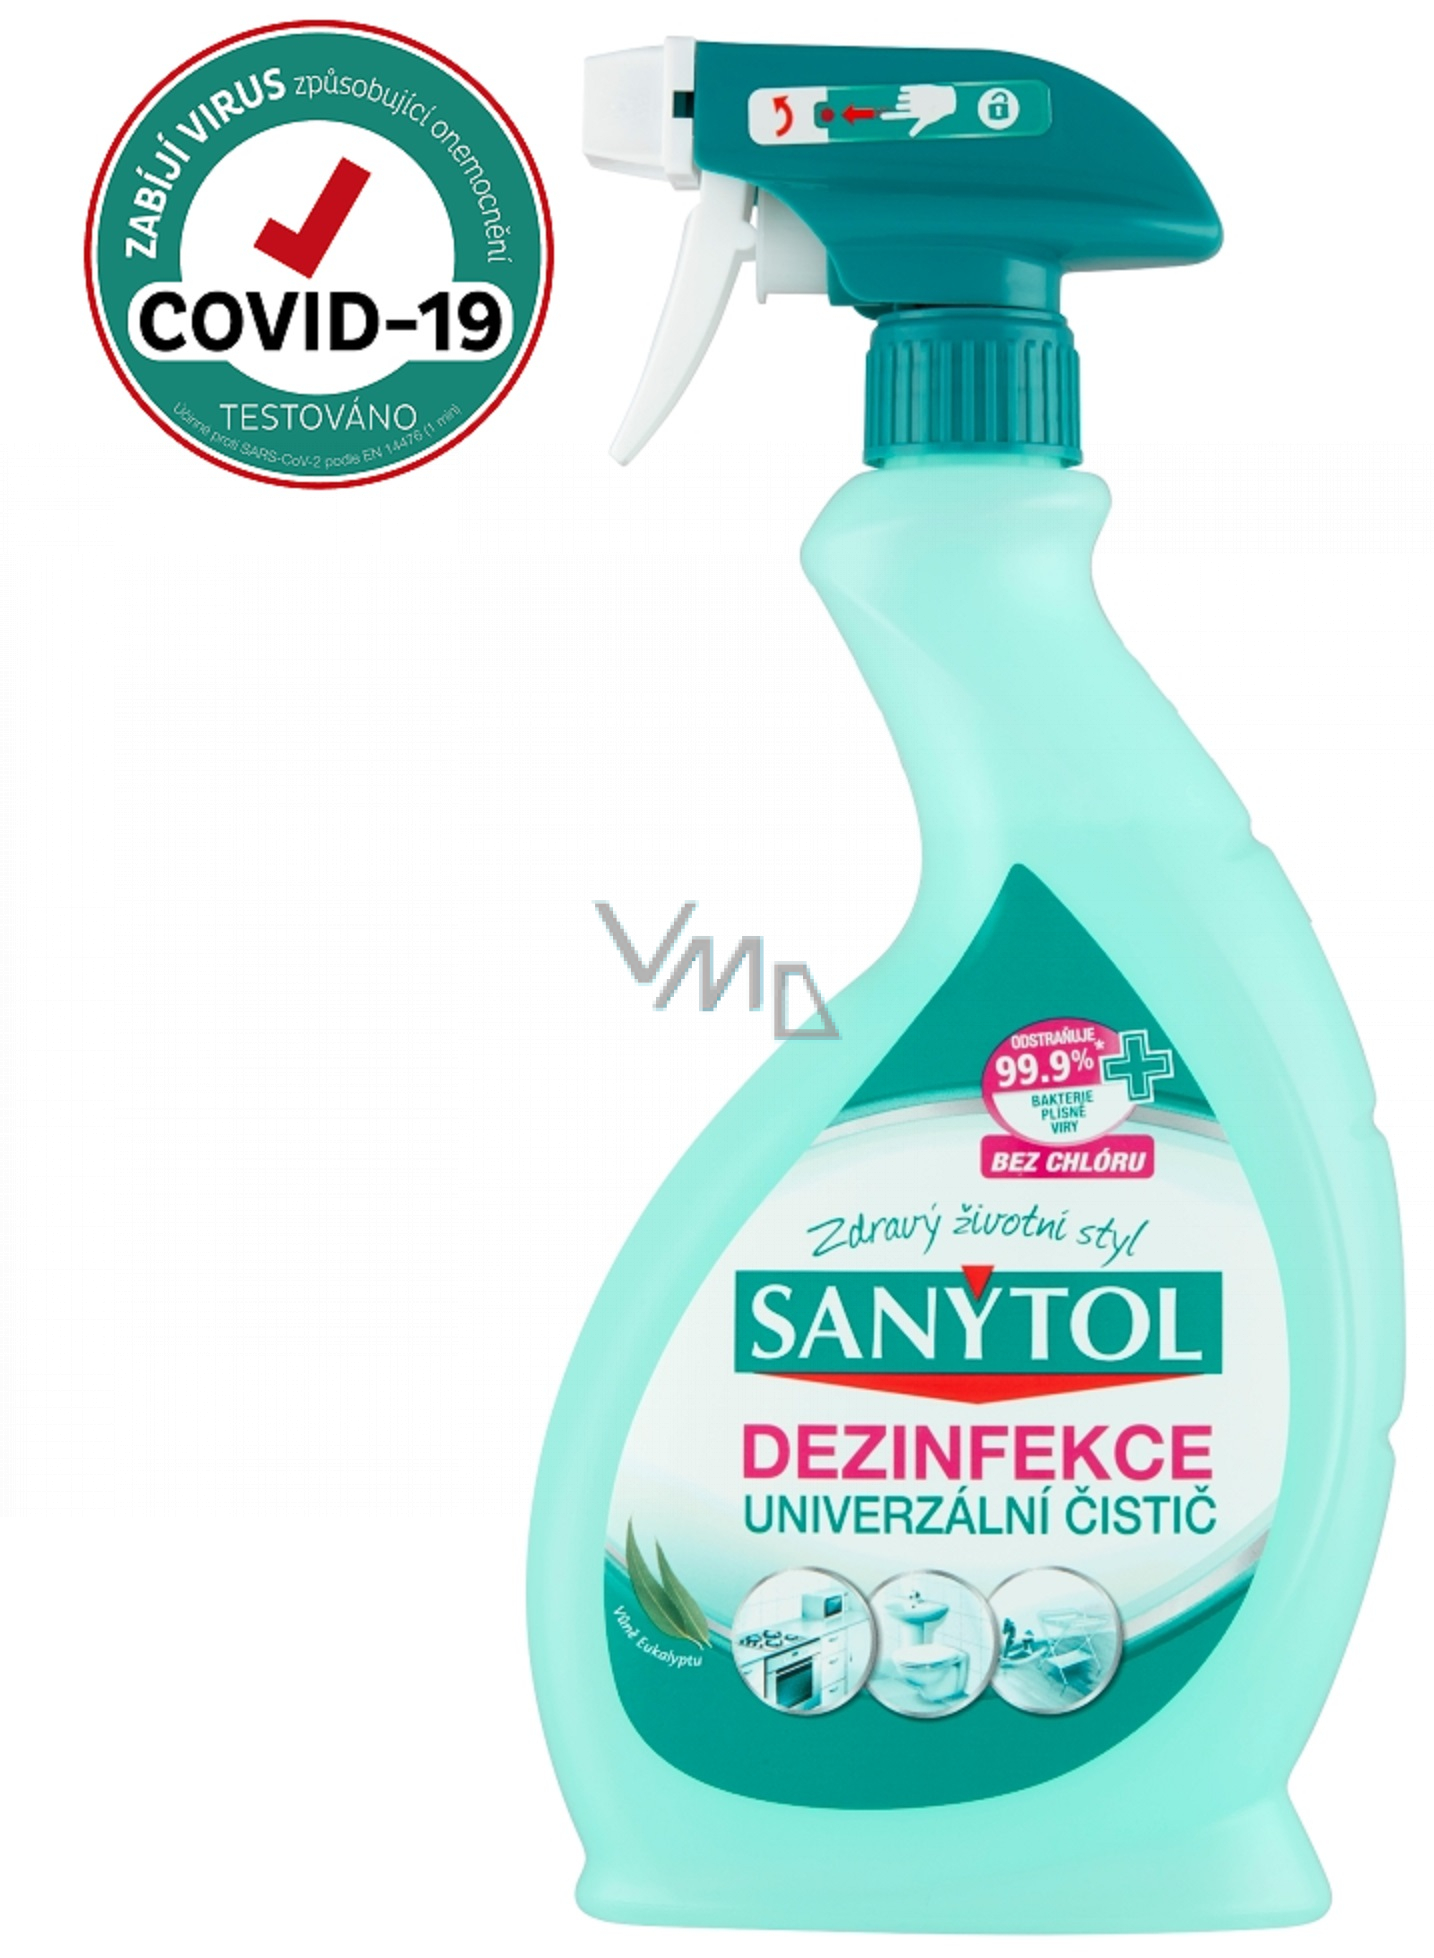 Sanytol Eucalyptus disinfectant universal cleaner spray 500 ml - VMD  parfumerie - drogerie